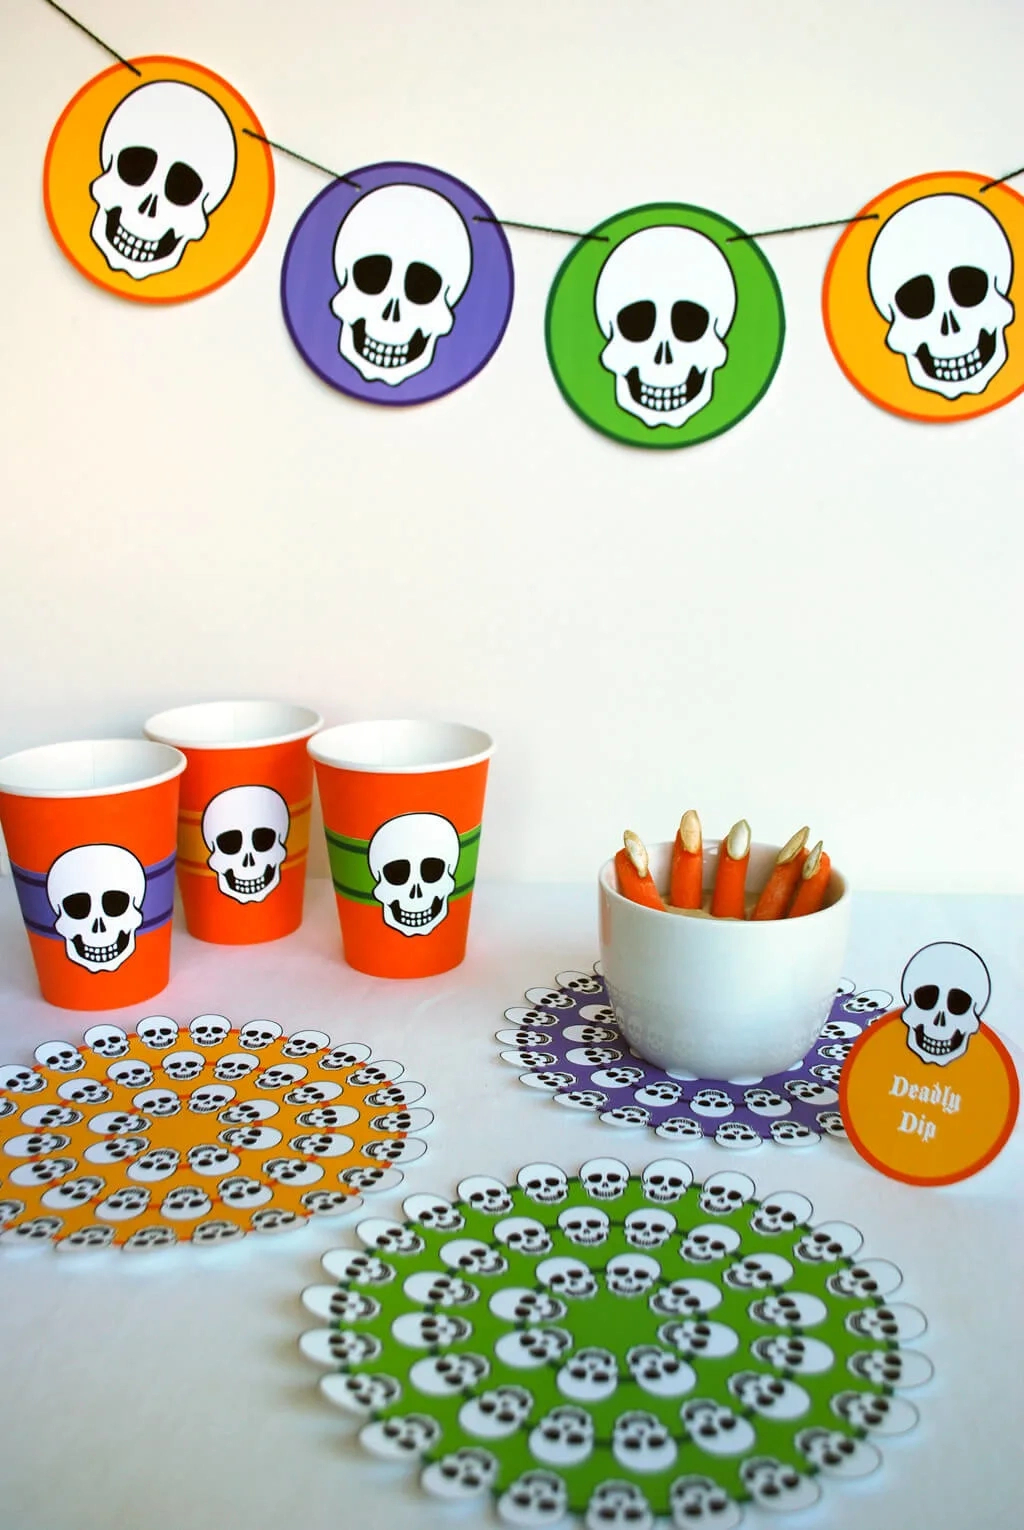 Skeleton Free Printable Halloween Party Decorations - Merriment Design throughout Free Printable Halloween Party Decorations